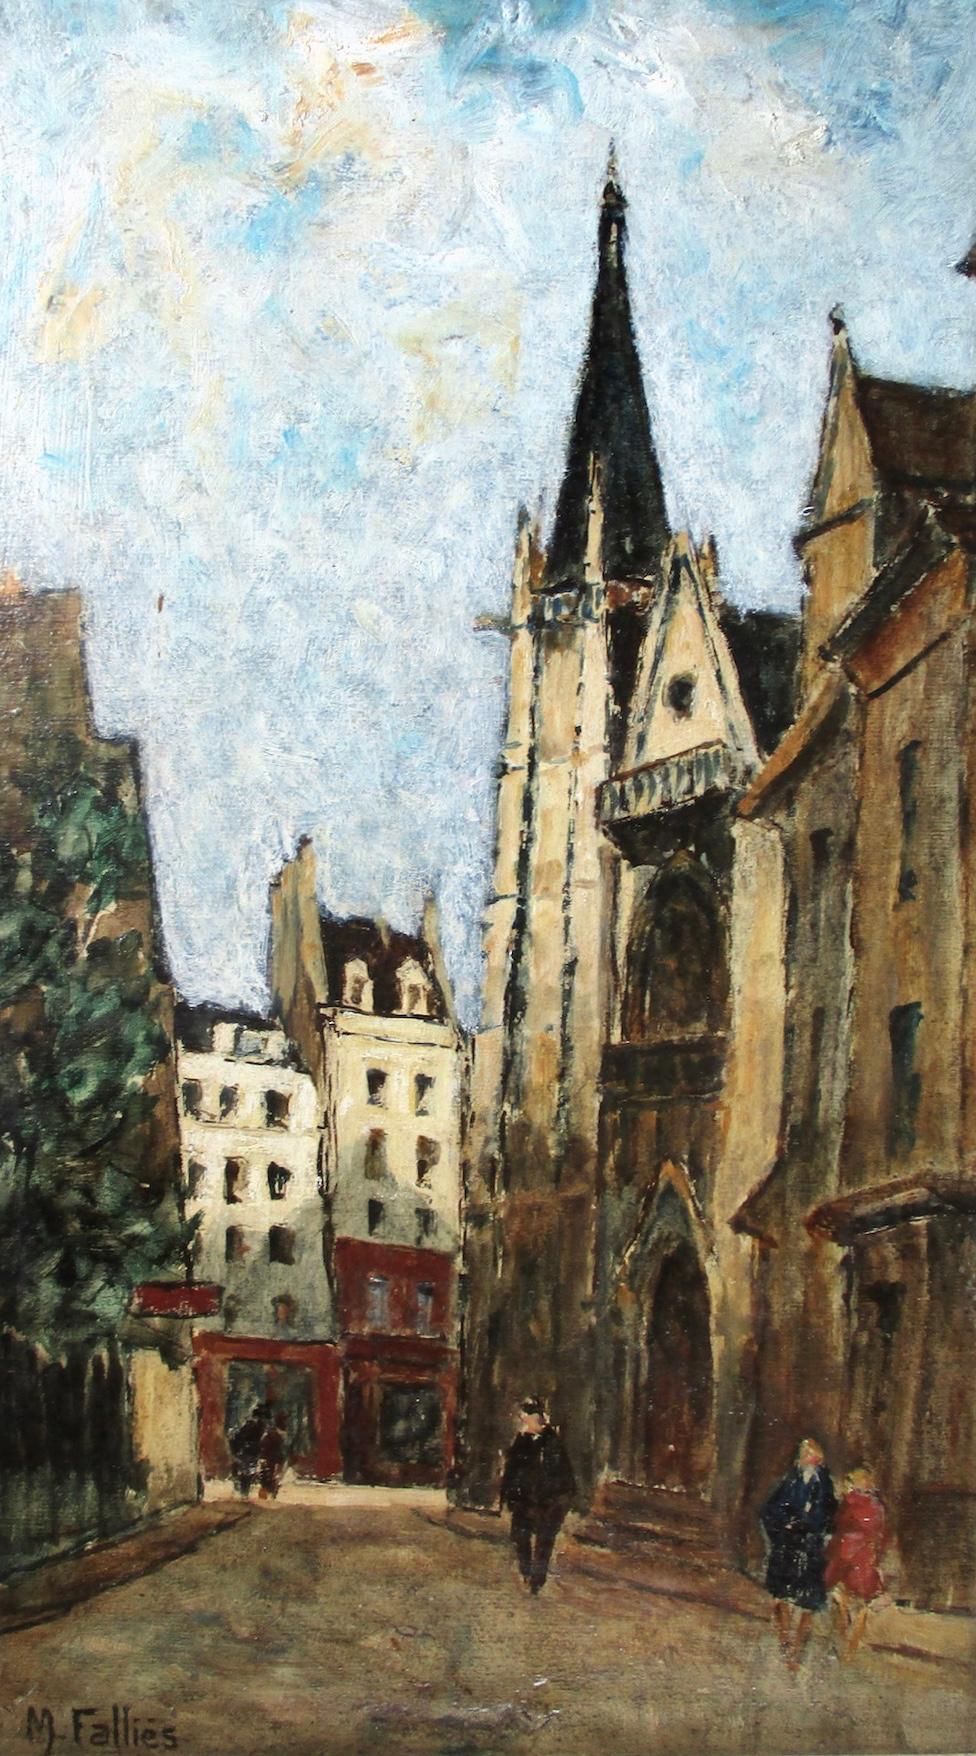 Maurice Falliès Figurative Painting - Paris, the Latin Quarter